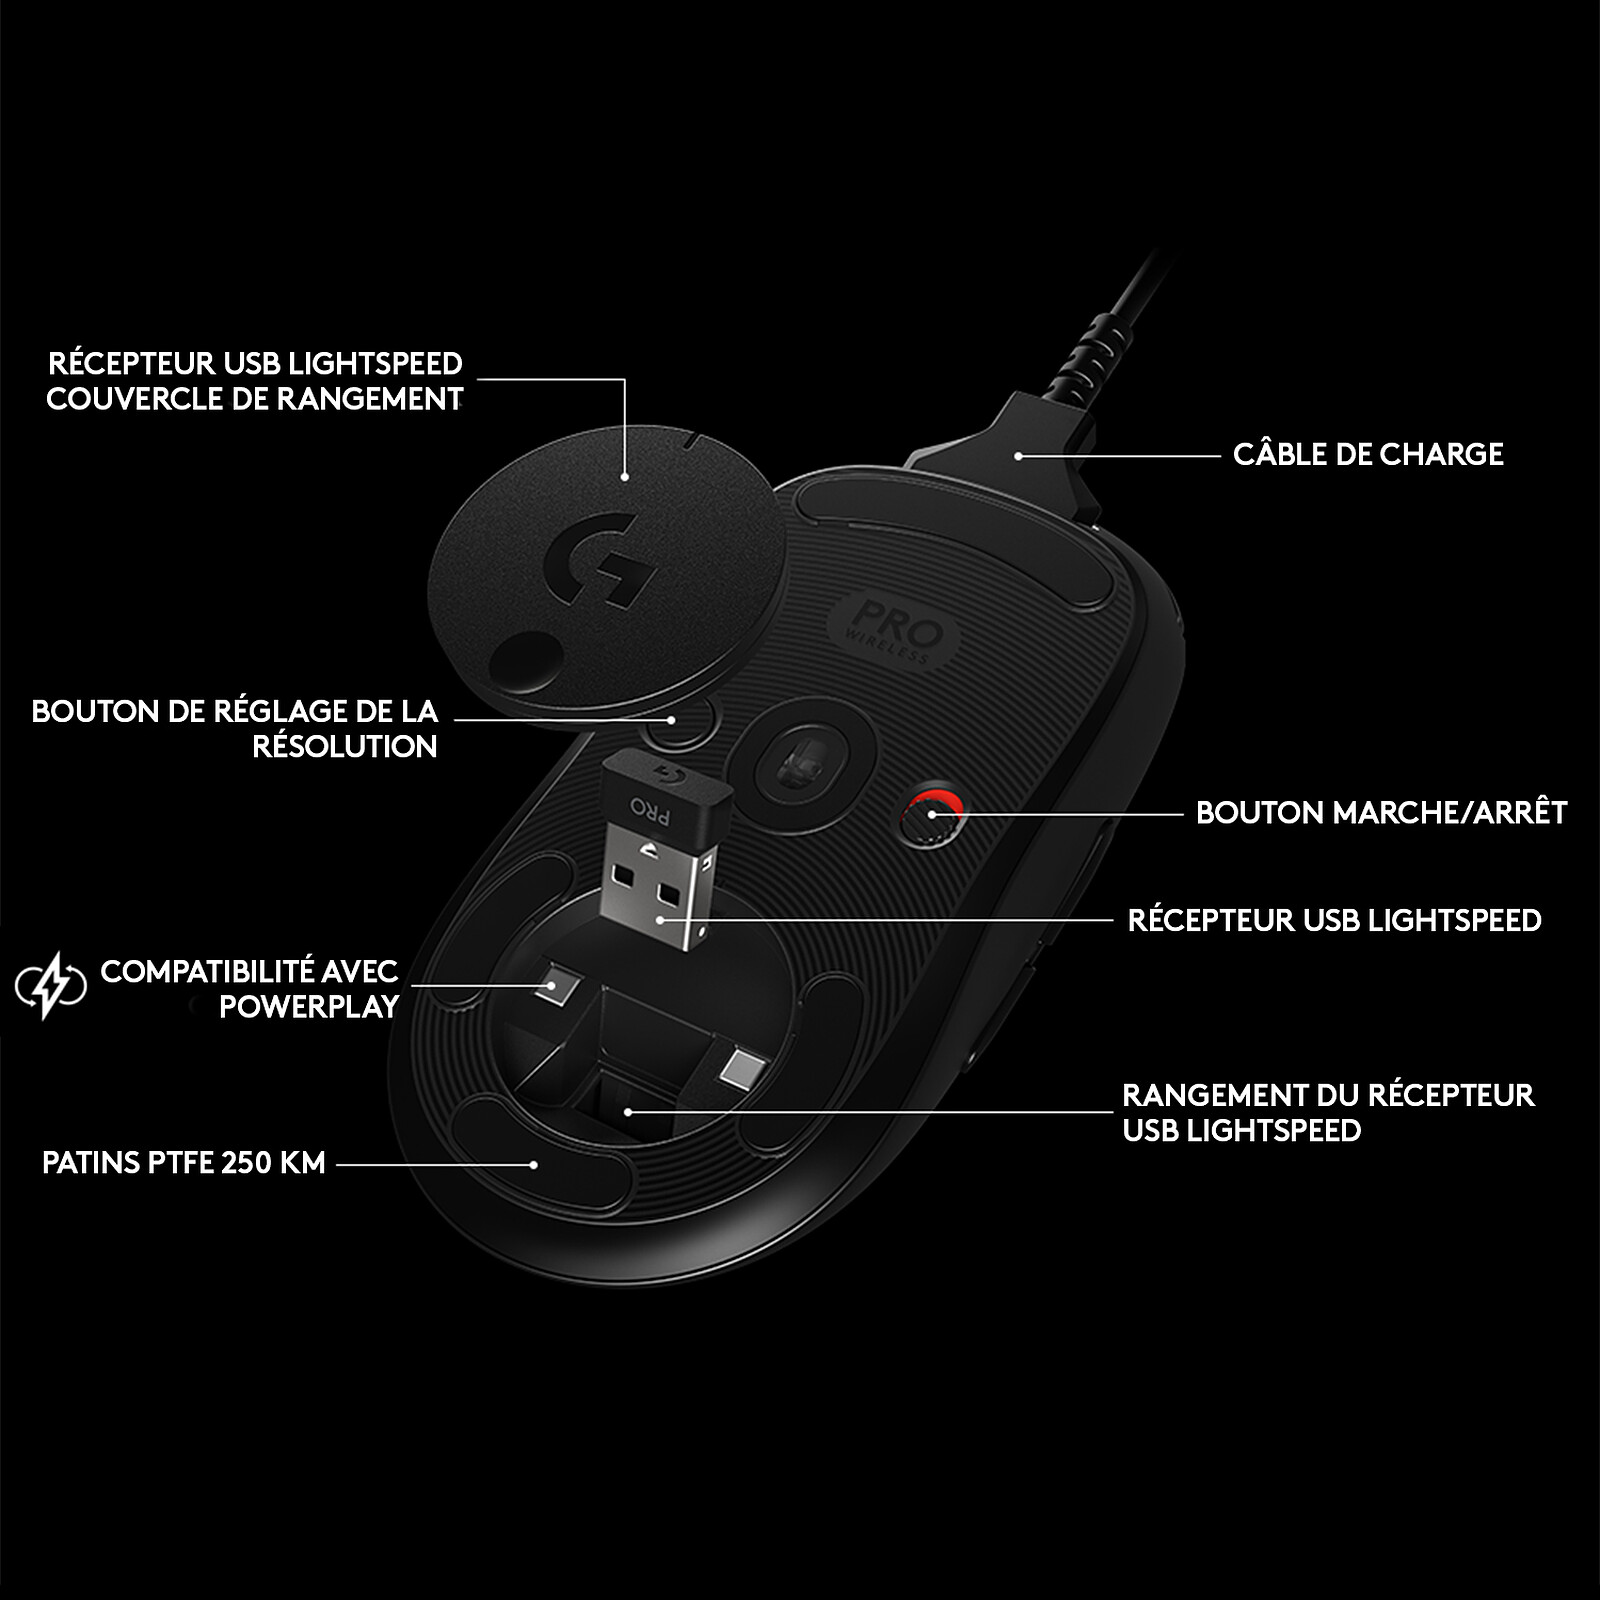 ratón Forzado Imperial Logitech G Pro Wireless Gaming Mouse - Ratón PC Logitech G en LDLC